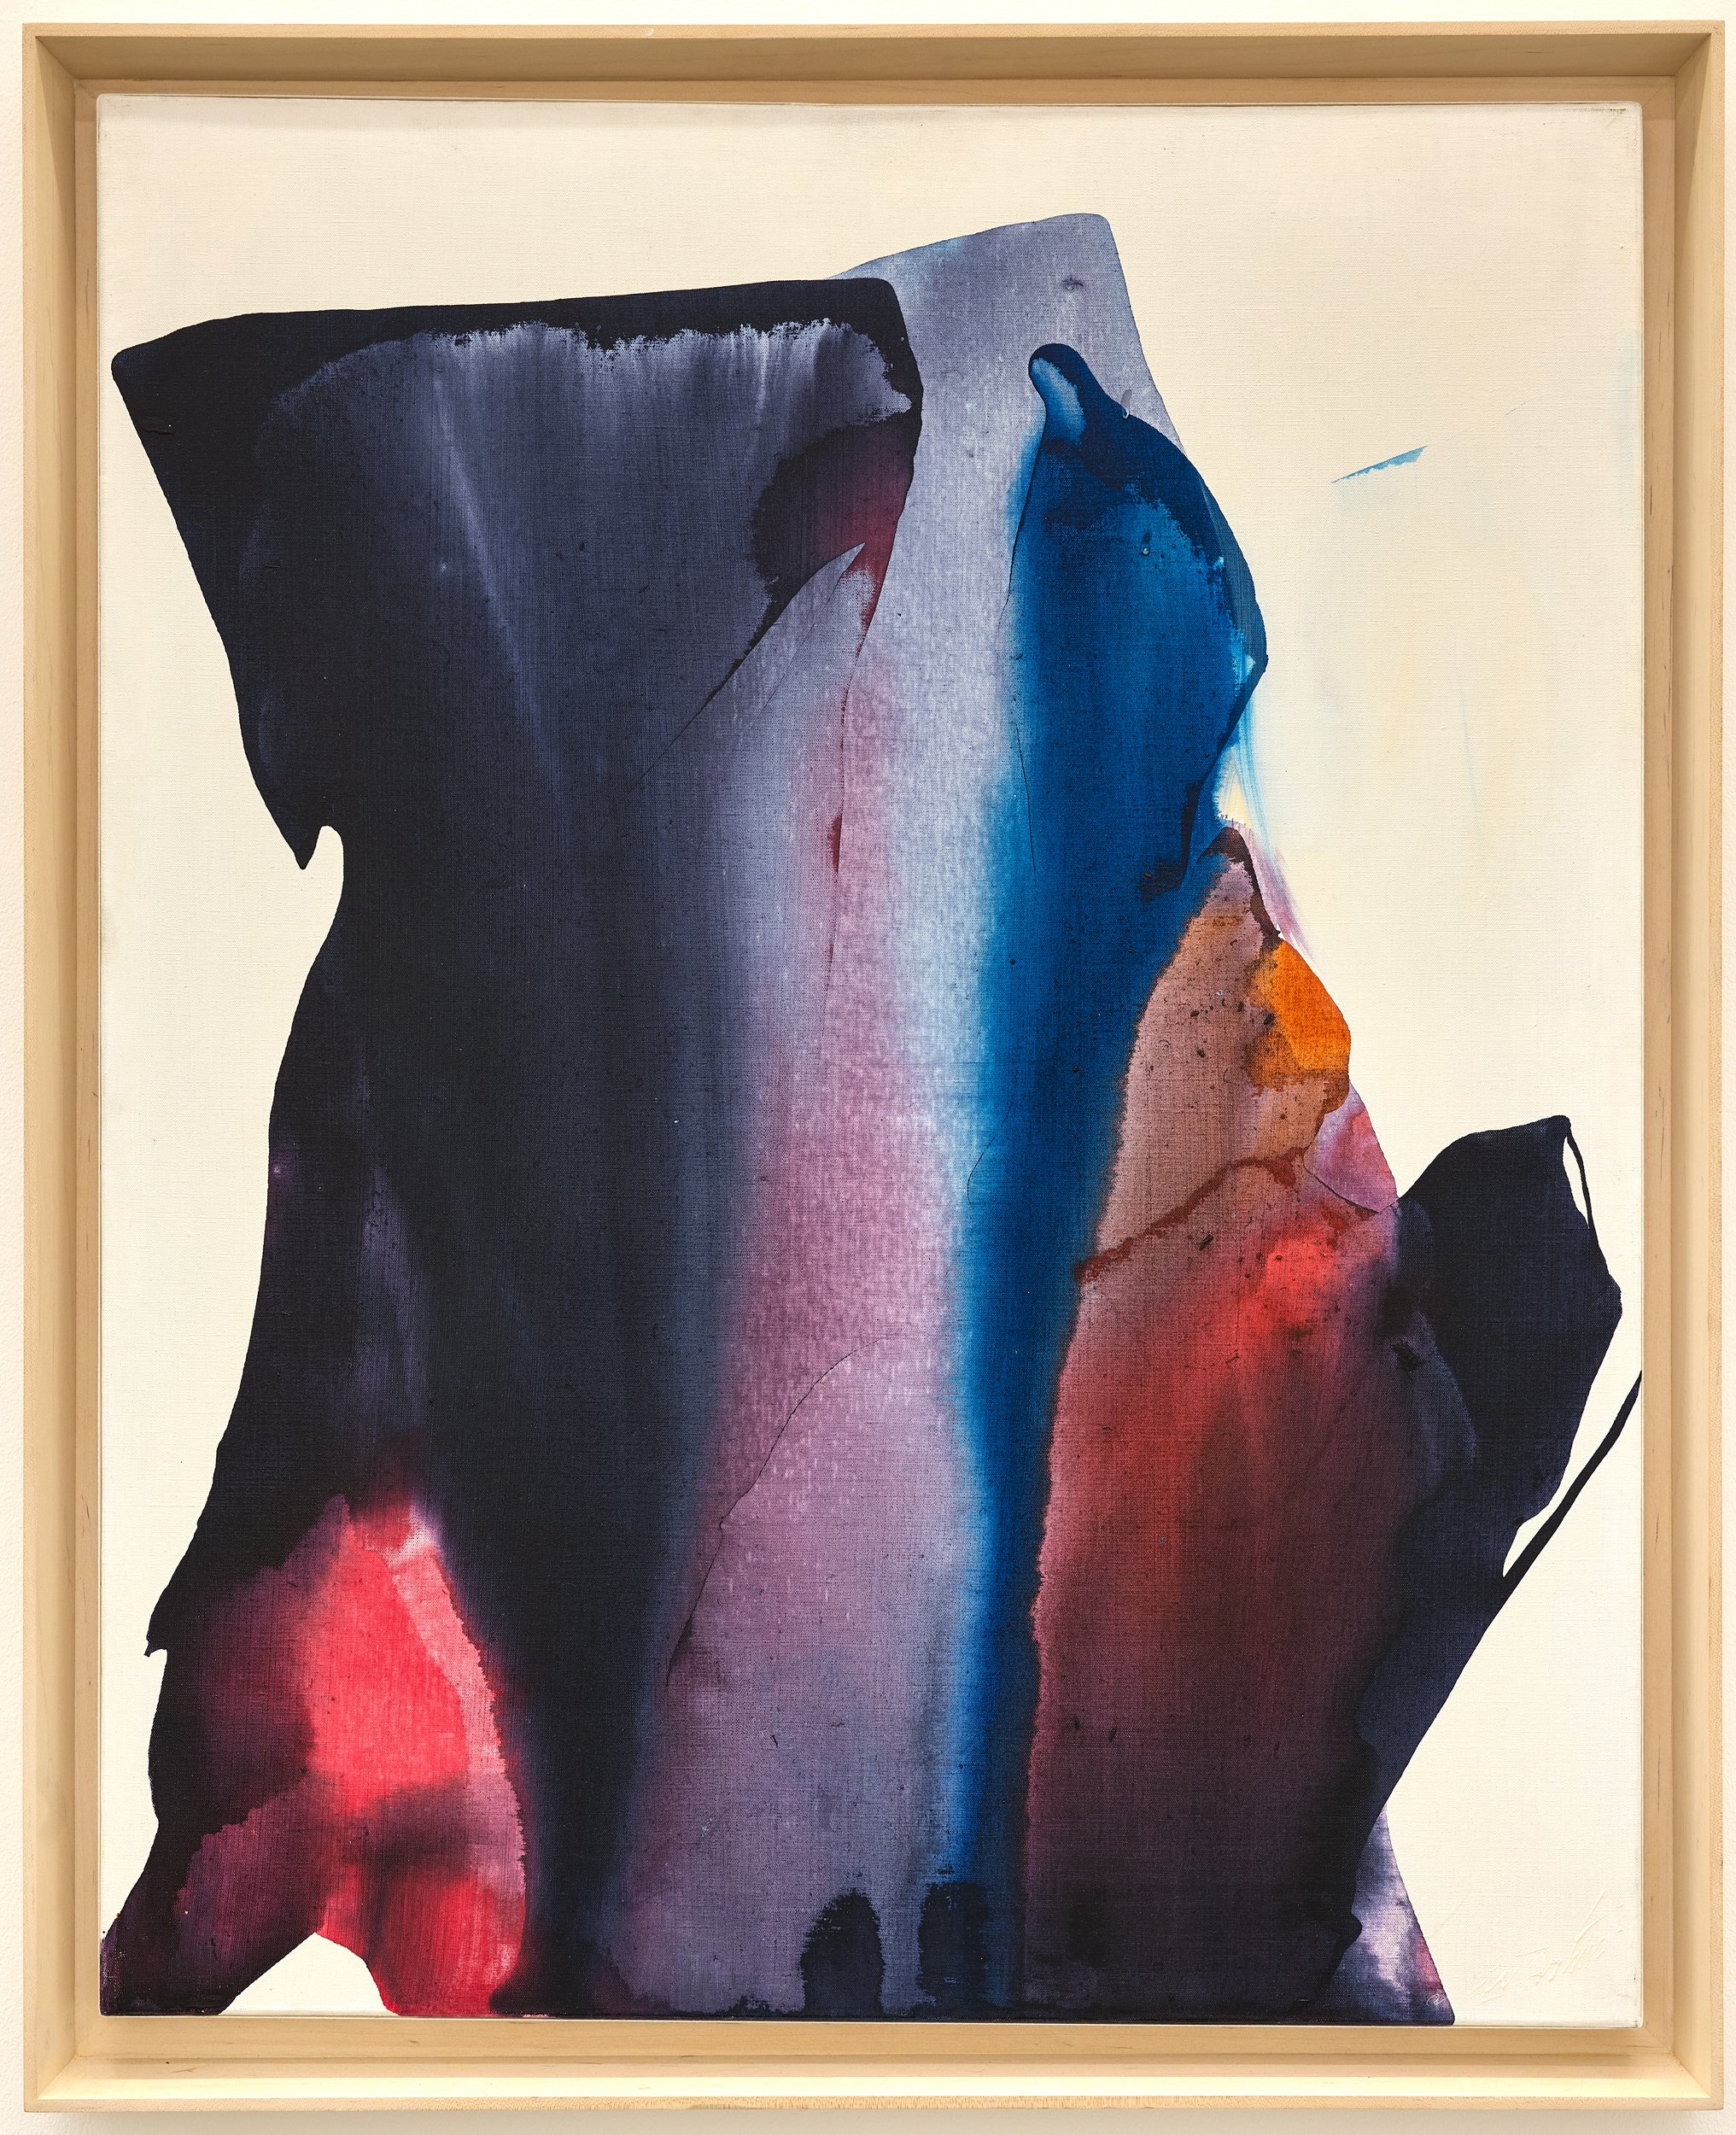 Paul Jenkins, Phenomena Nightwood, 1962, signed, acrylic on canvas, 31 3:4 x 25 1:2 in, 80.6 x 64.8 cm